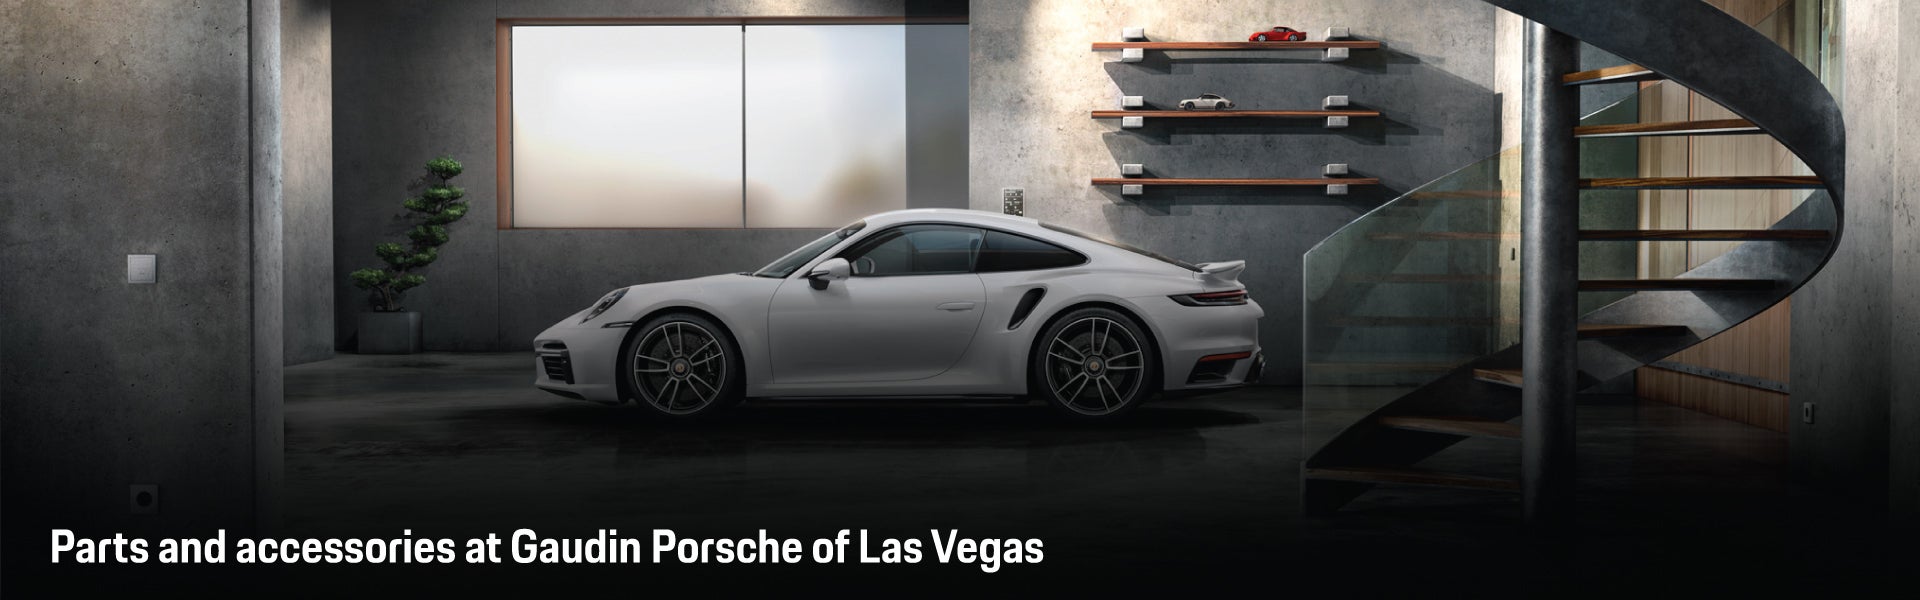 Gaudin Porsche of Las Vegas Parts